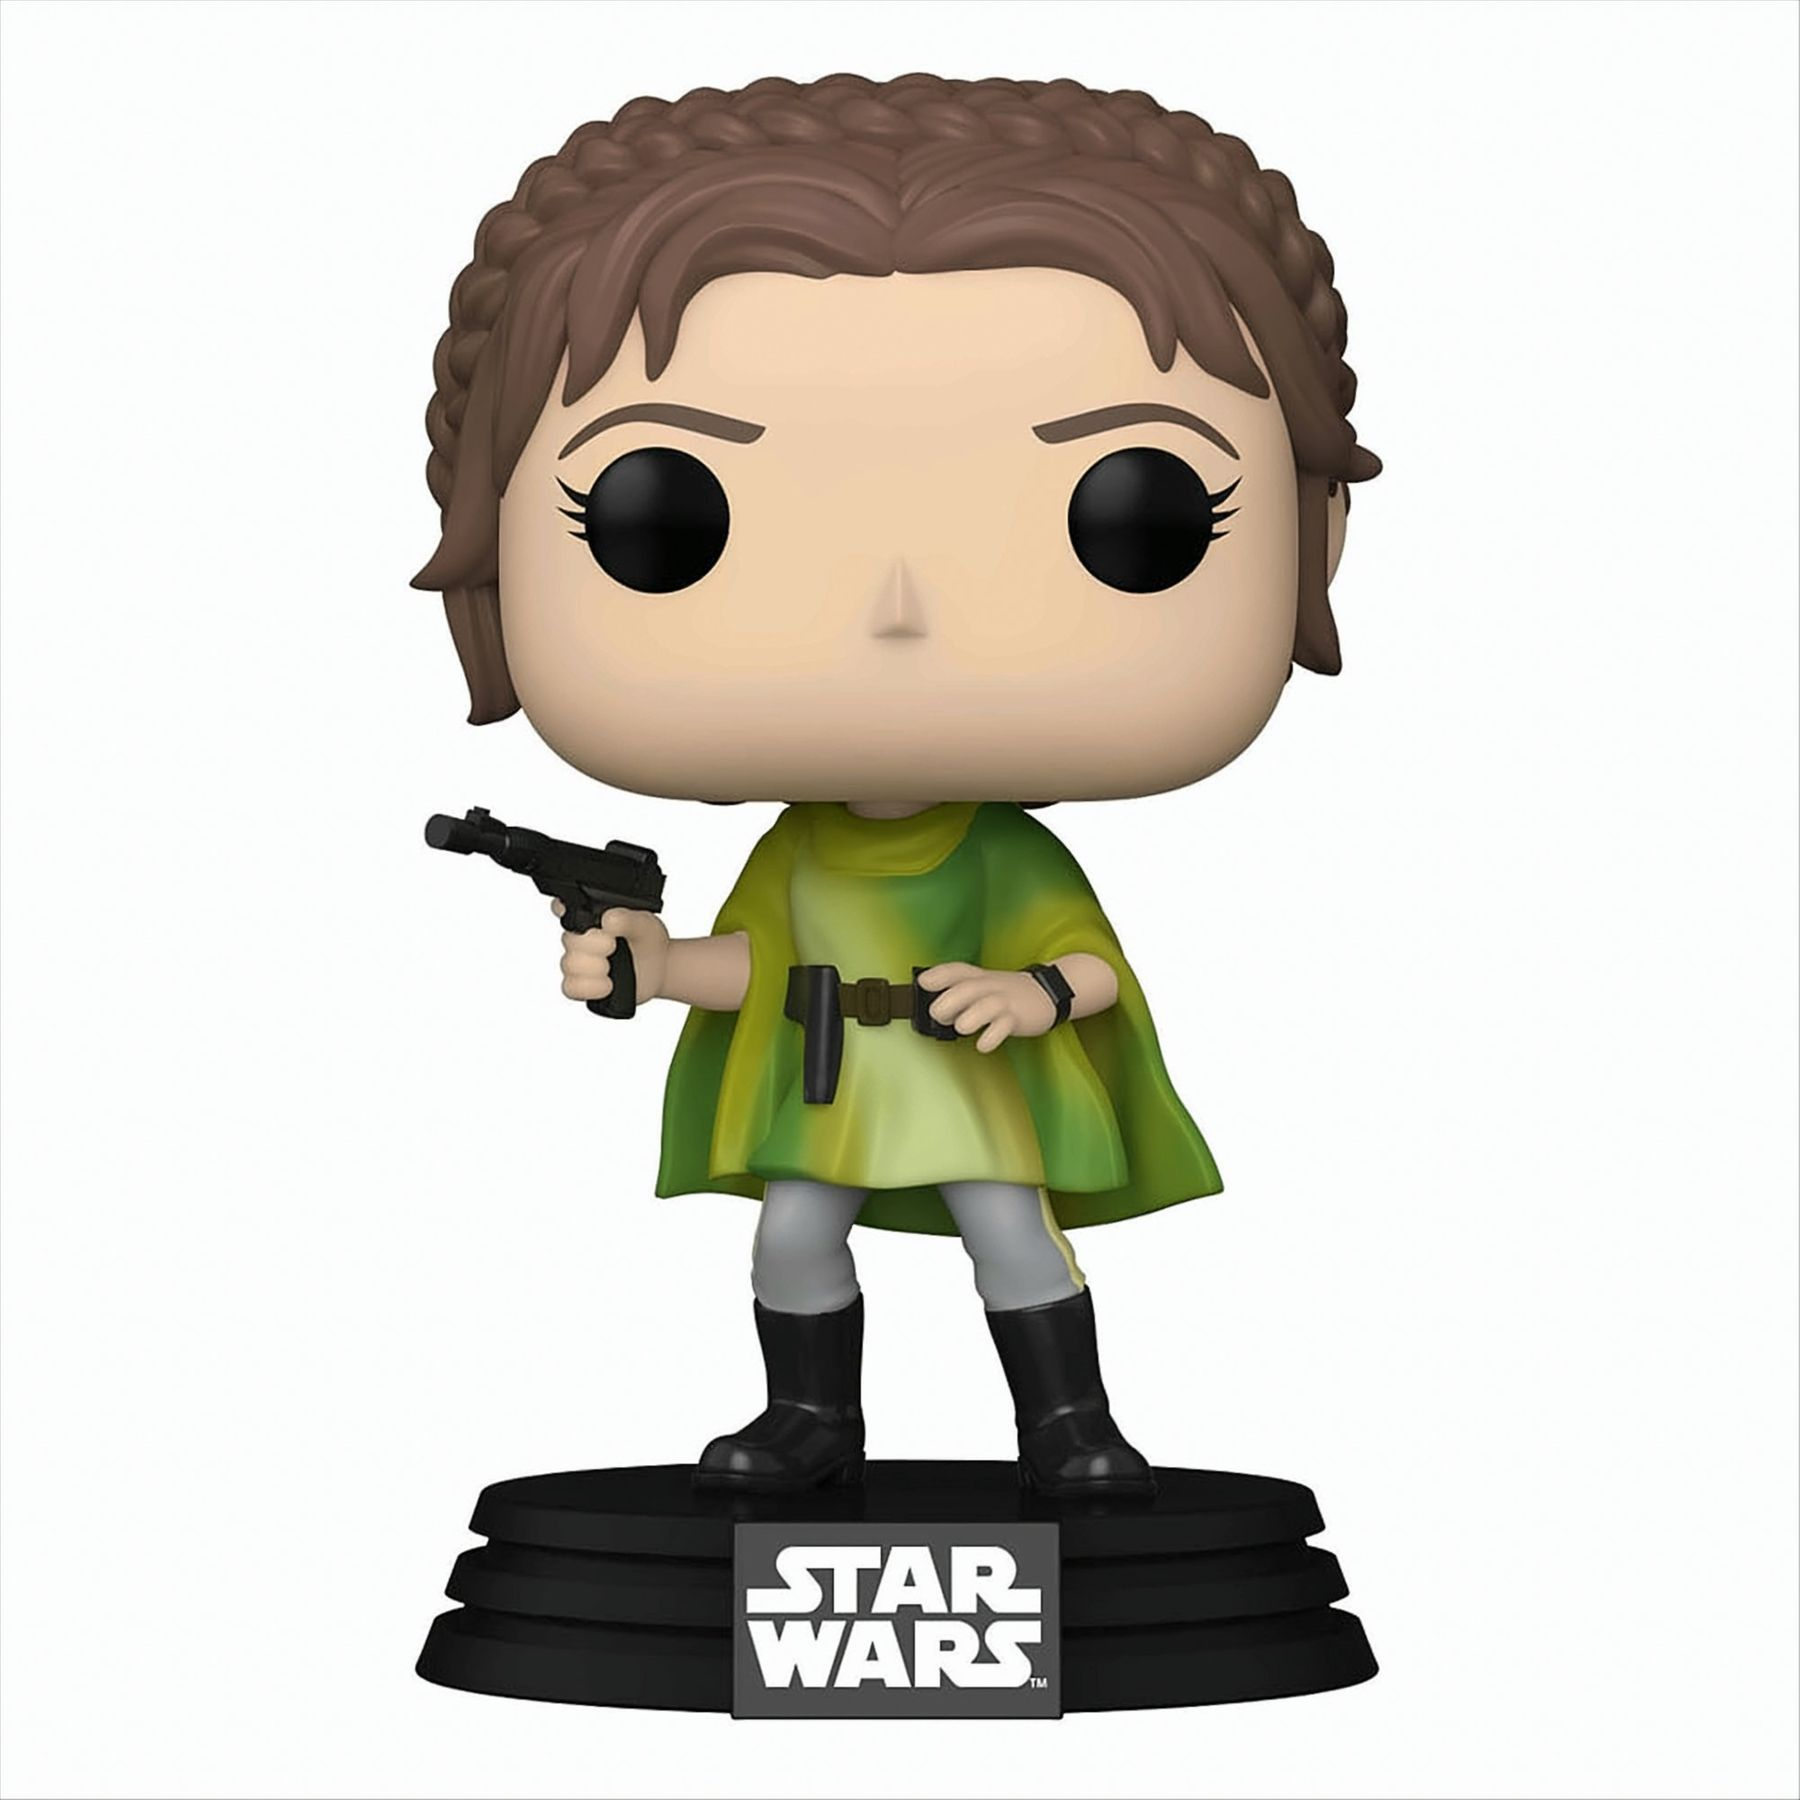 Wars 40th Star POP Princess Leia -